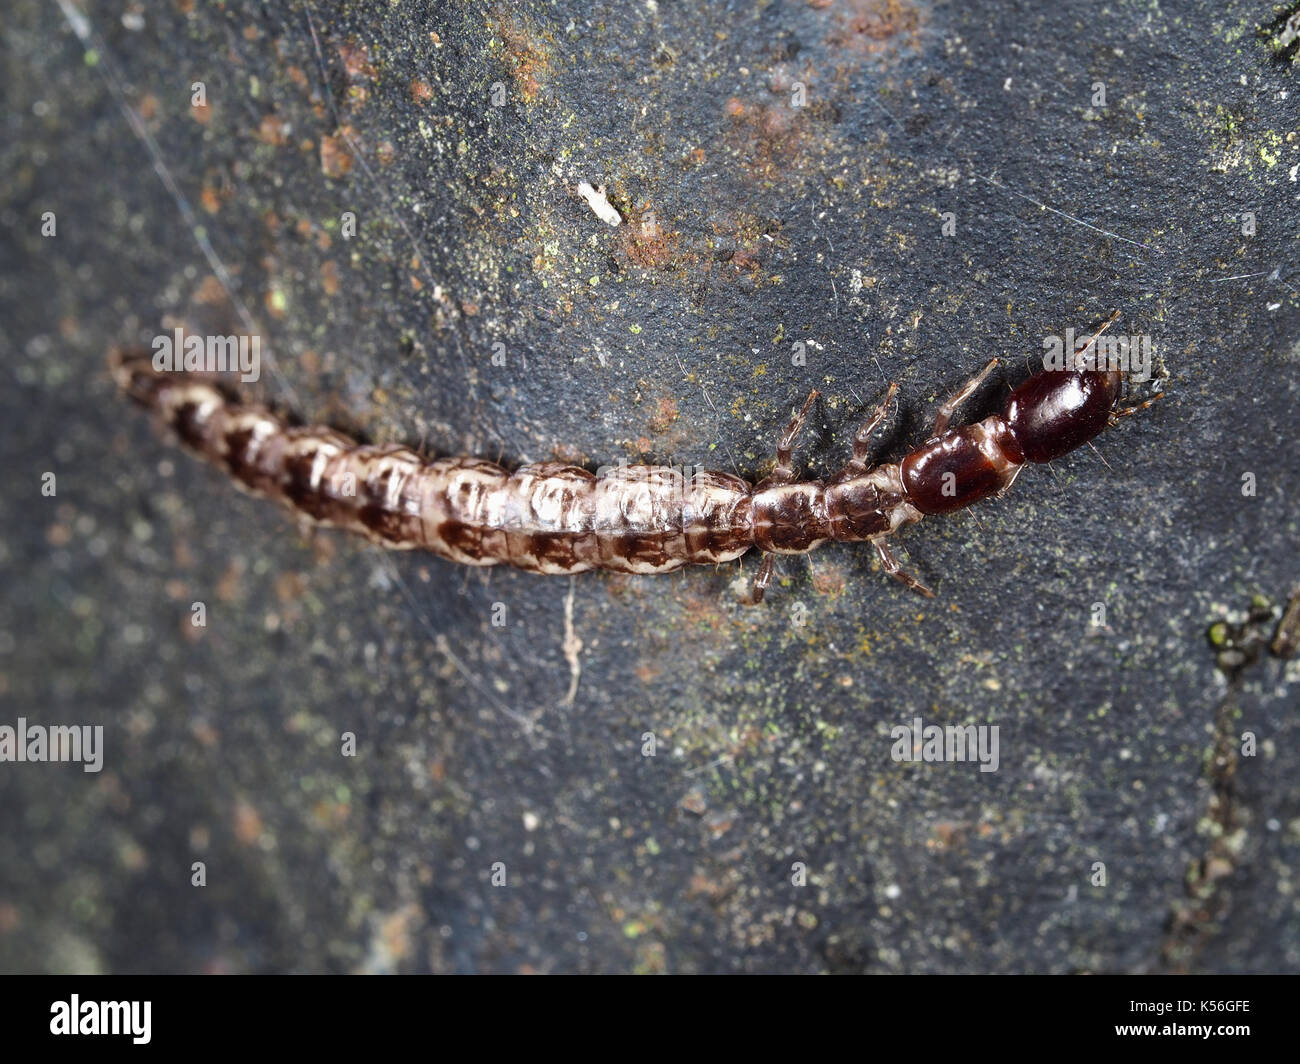 Snakefly larva on a metallic surface outdoor in Western WA, USA Stock Photo